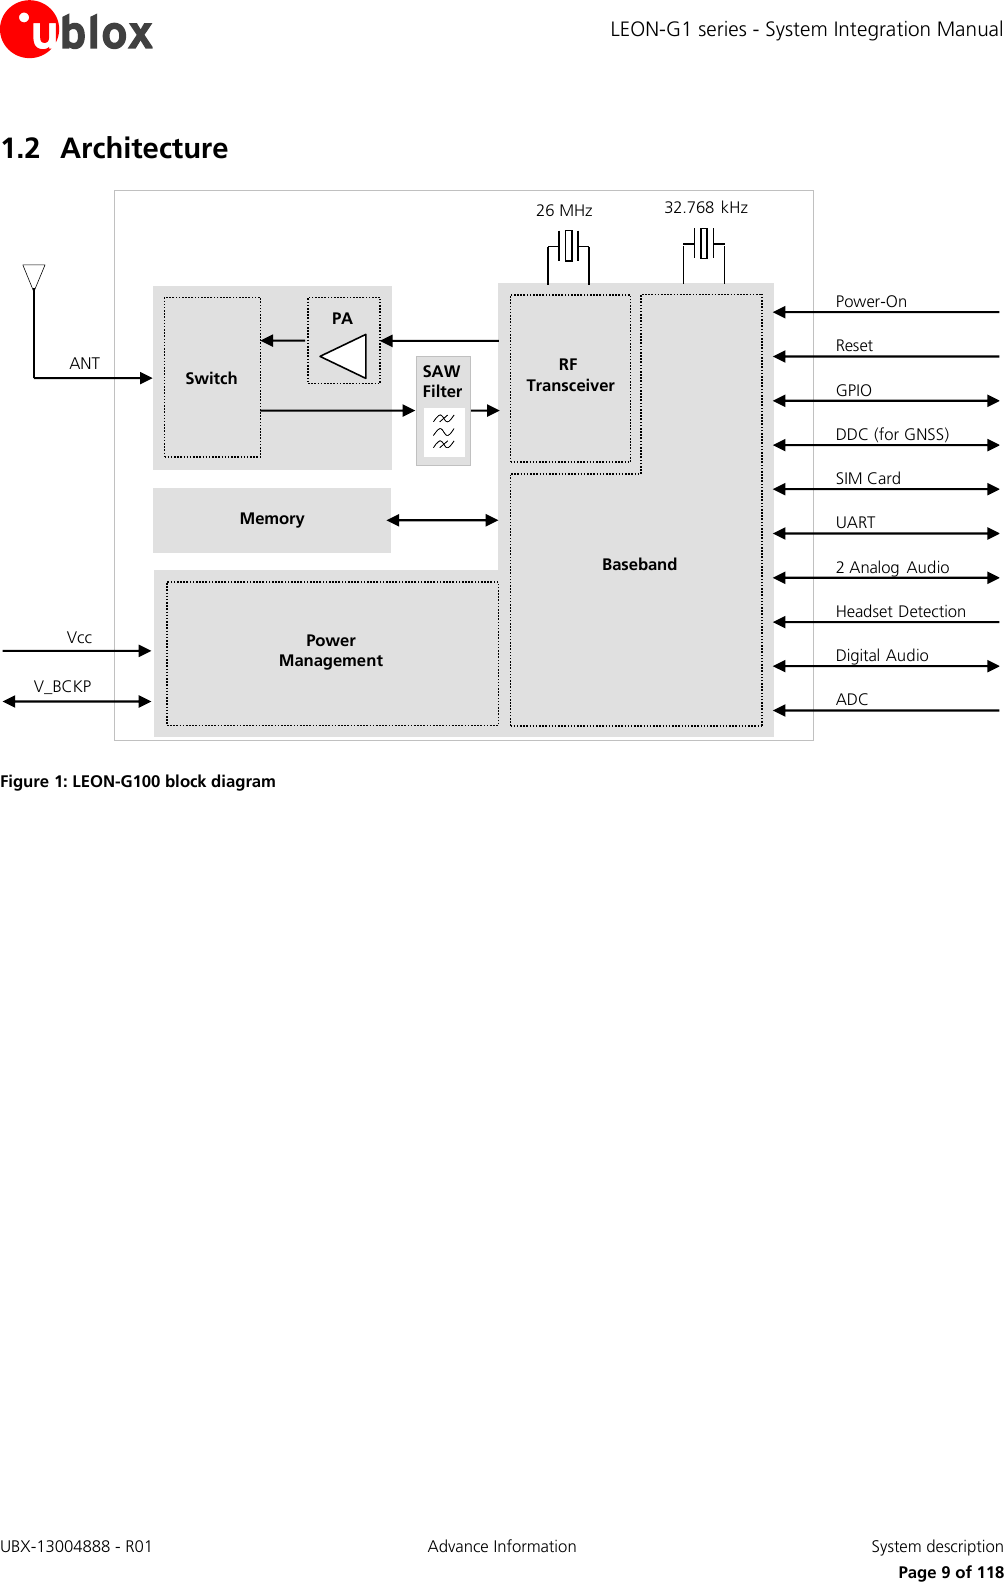 LEON-G1 series - System Integration Manual UBX-13004888 - R01  Advance Information  System description      Page 9 of 118 1.2 Architecture Memory UART2 Analog AudioDDC (for GNSS)GPIOADCSIM CardVccV_BCKPPower-OnReset26 MHz 32.768 kHzHeadset DetectionRF TransceiverPowerManagementBasebandANT SAWFilterSwitchPADigital Audio Figure 1: LEON-G100 block diagram  